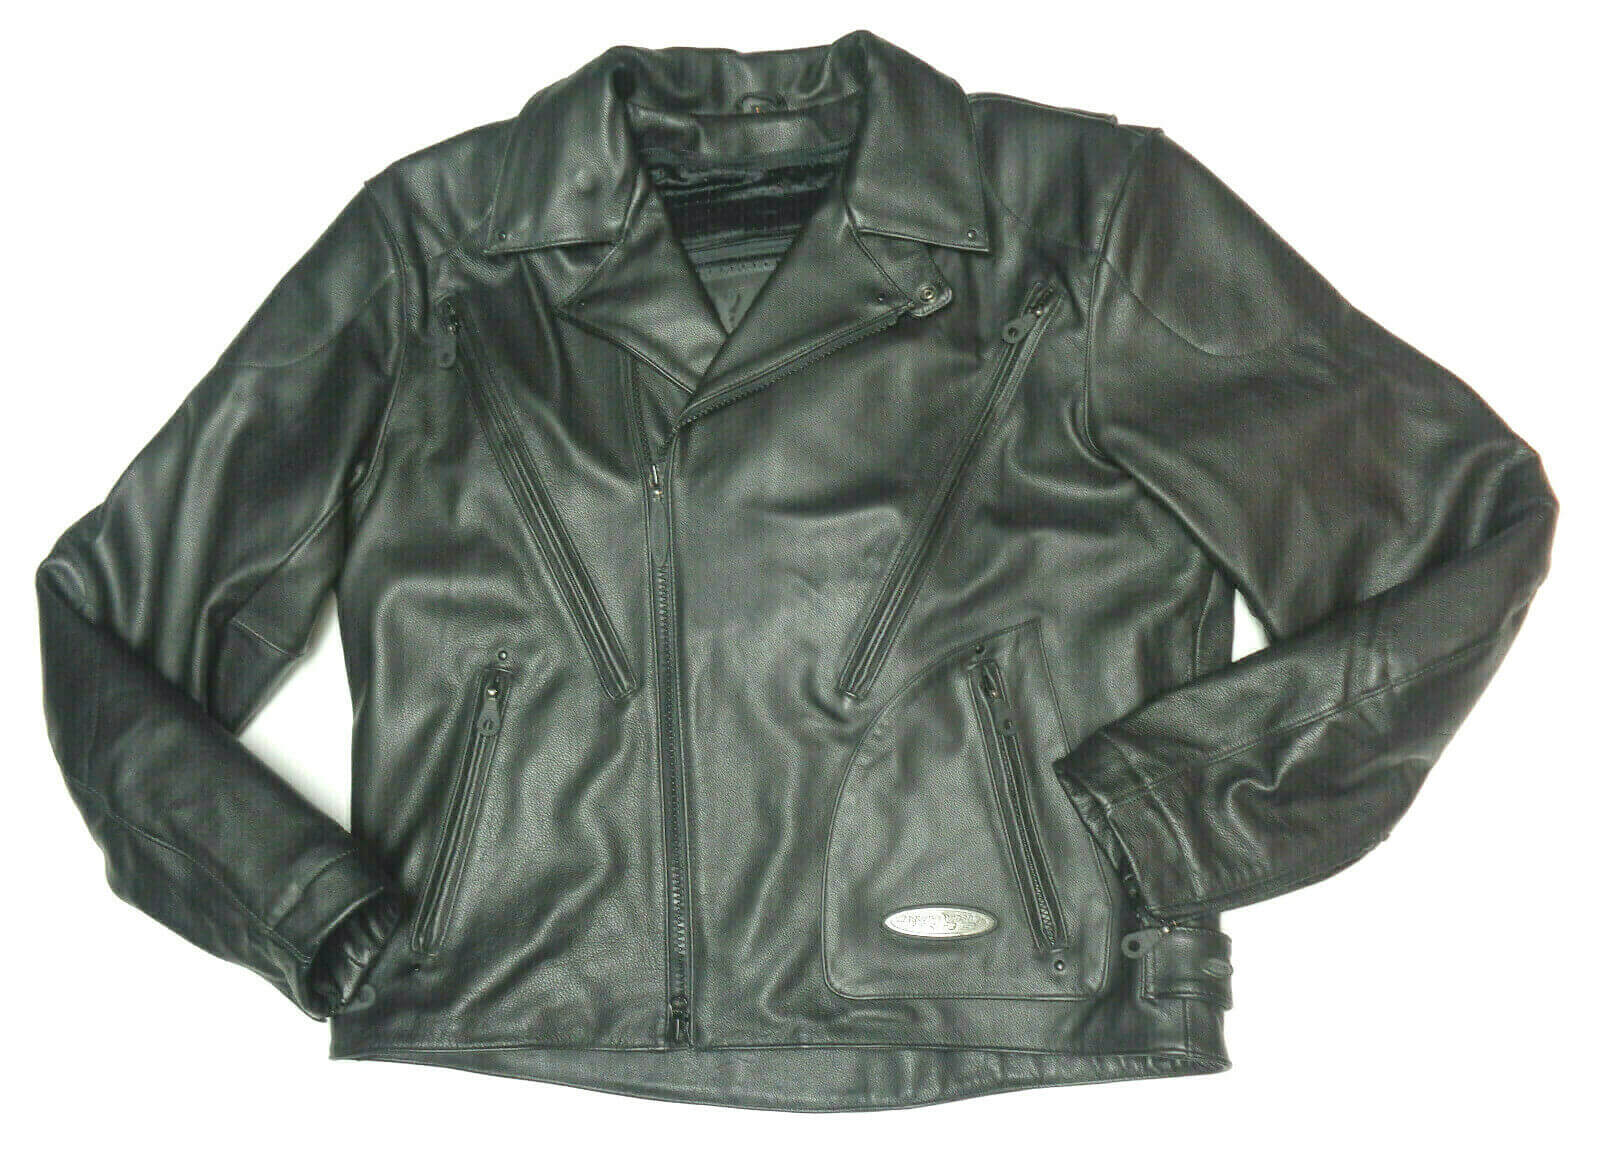 Rare Harley Davidson FXRG Black Leather Jacket